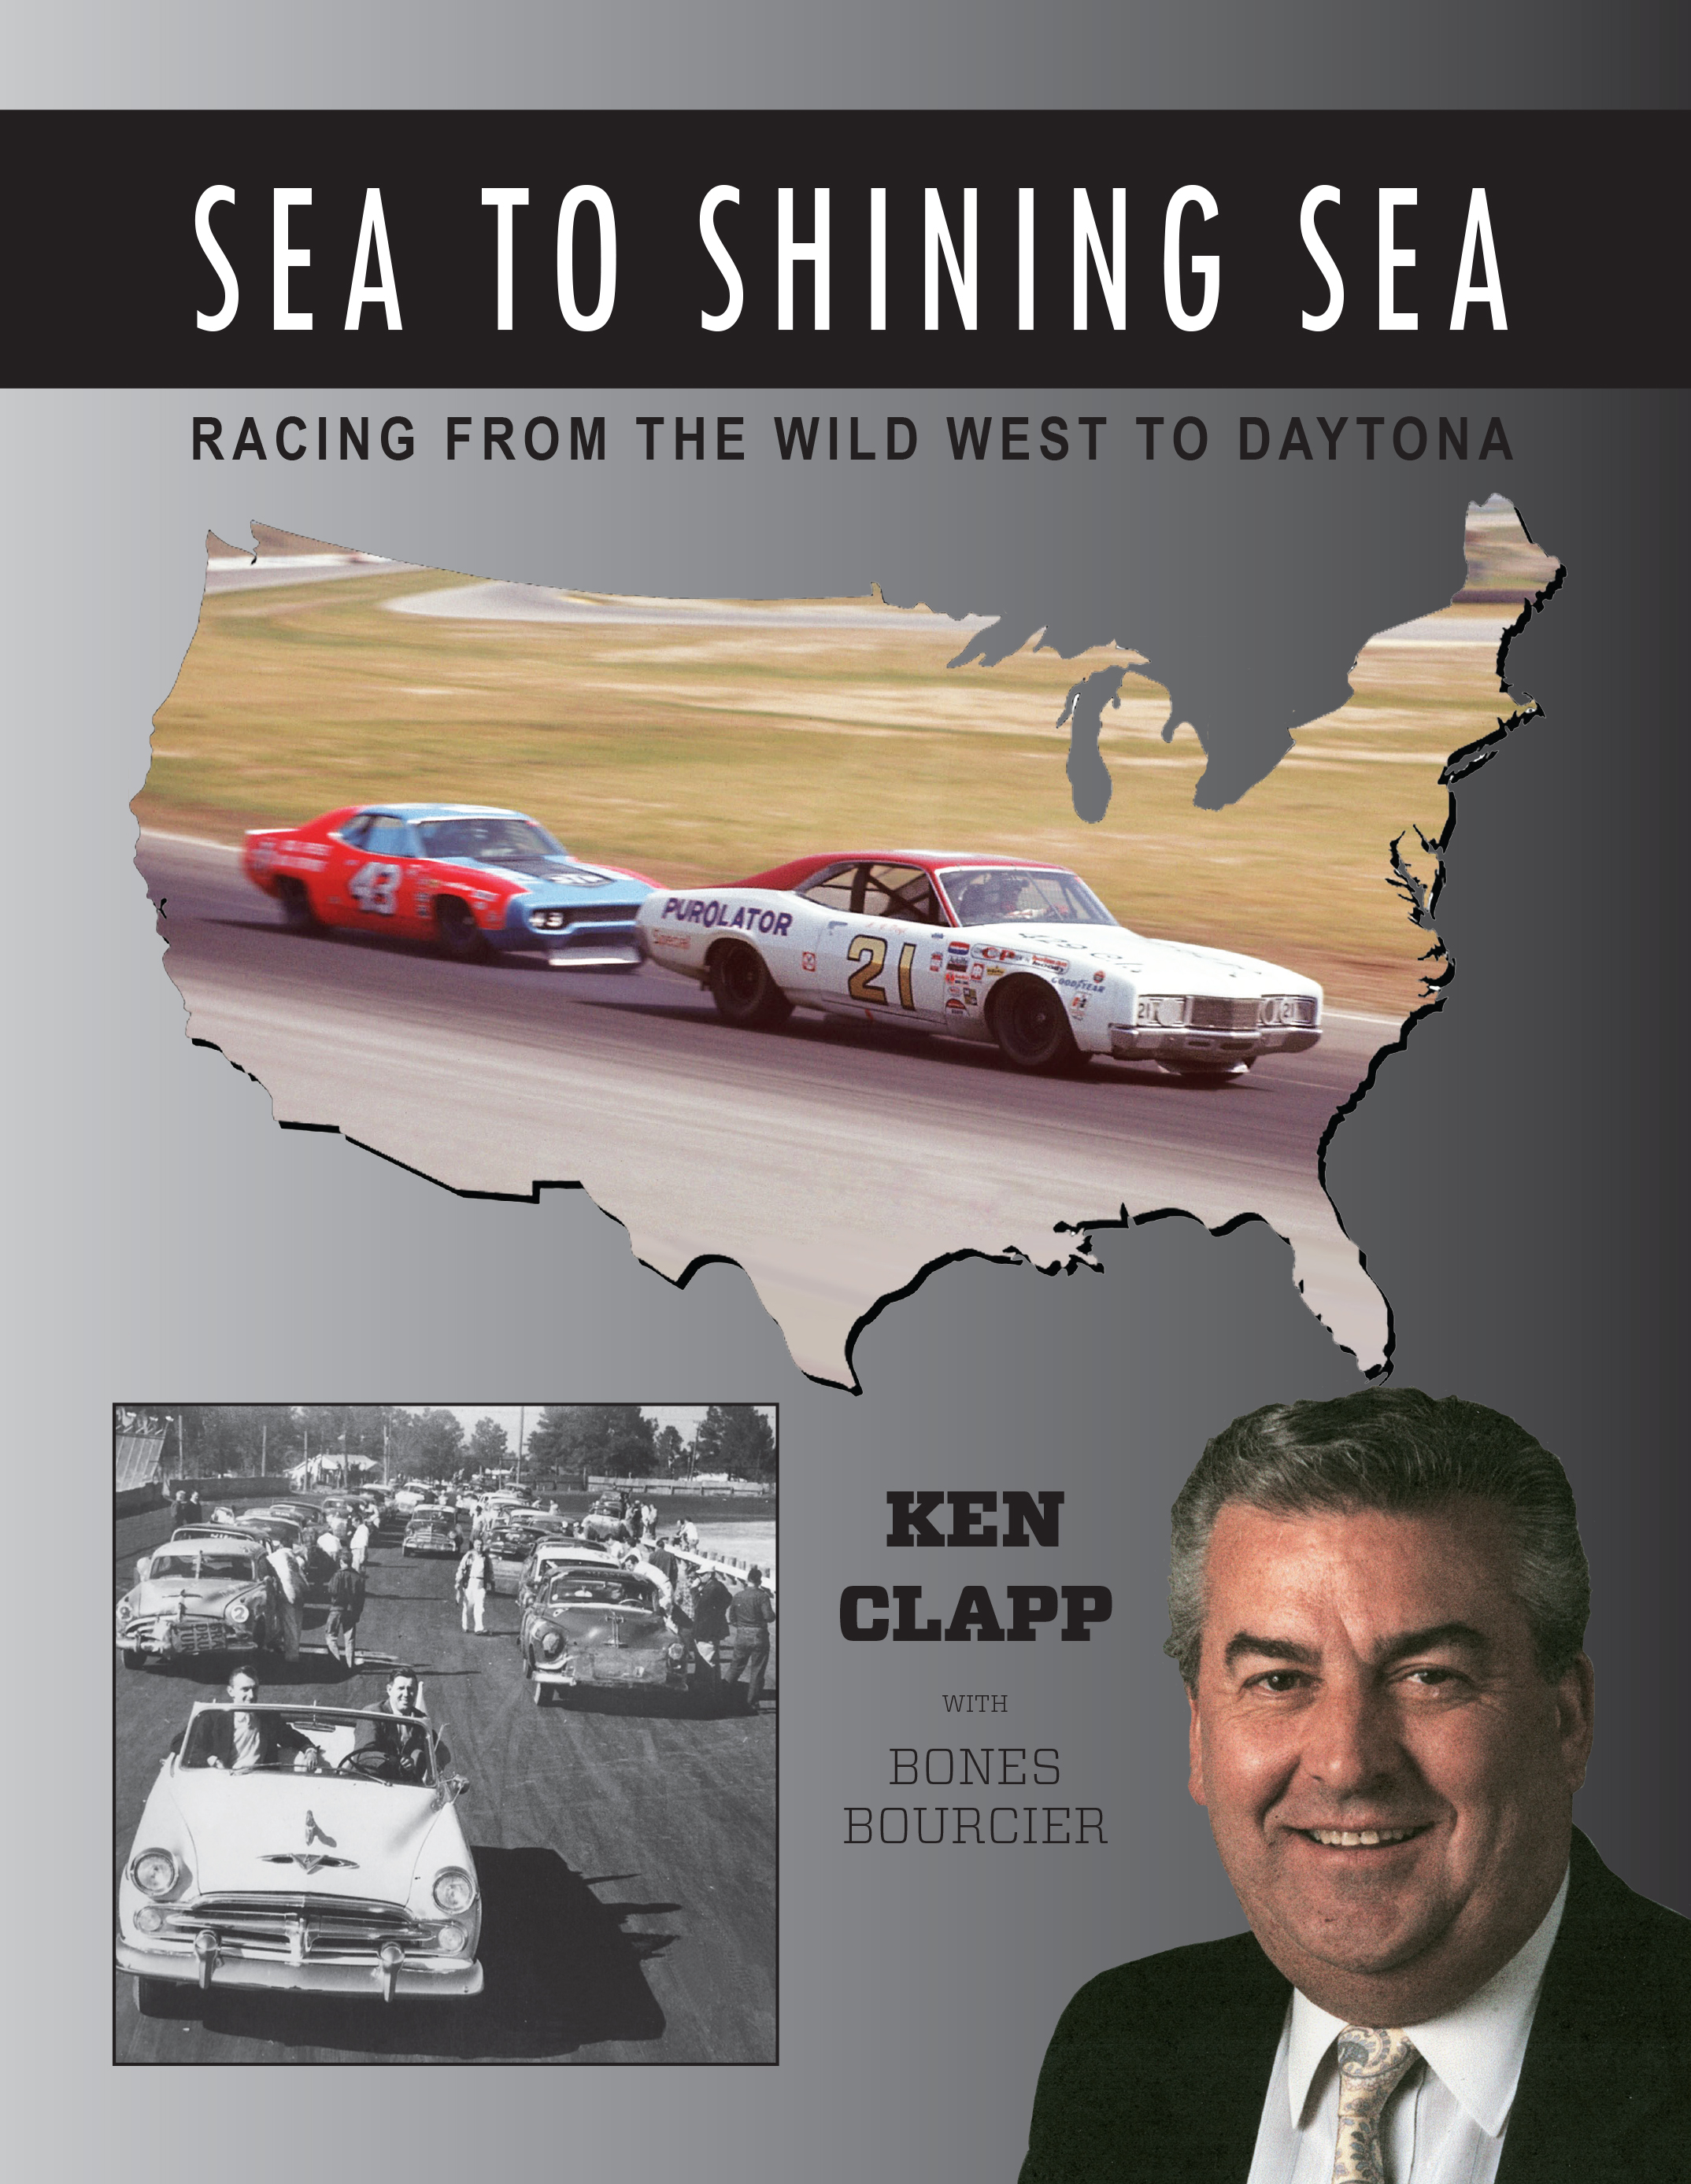 “SEA TO SHINING SEA: Racing from the Wild West to Daytona"